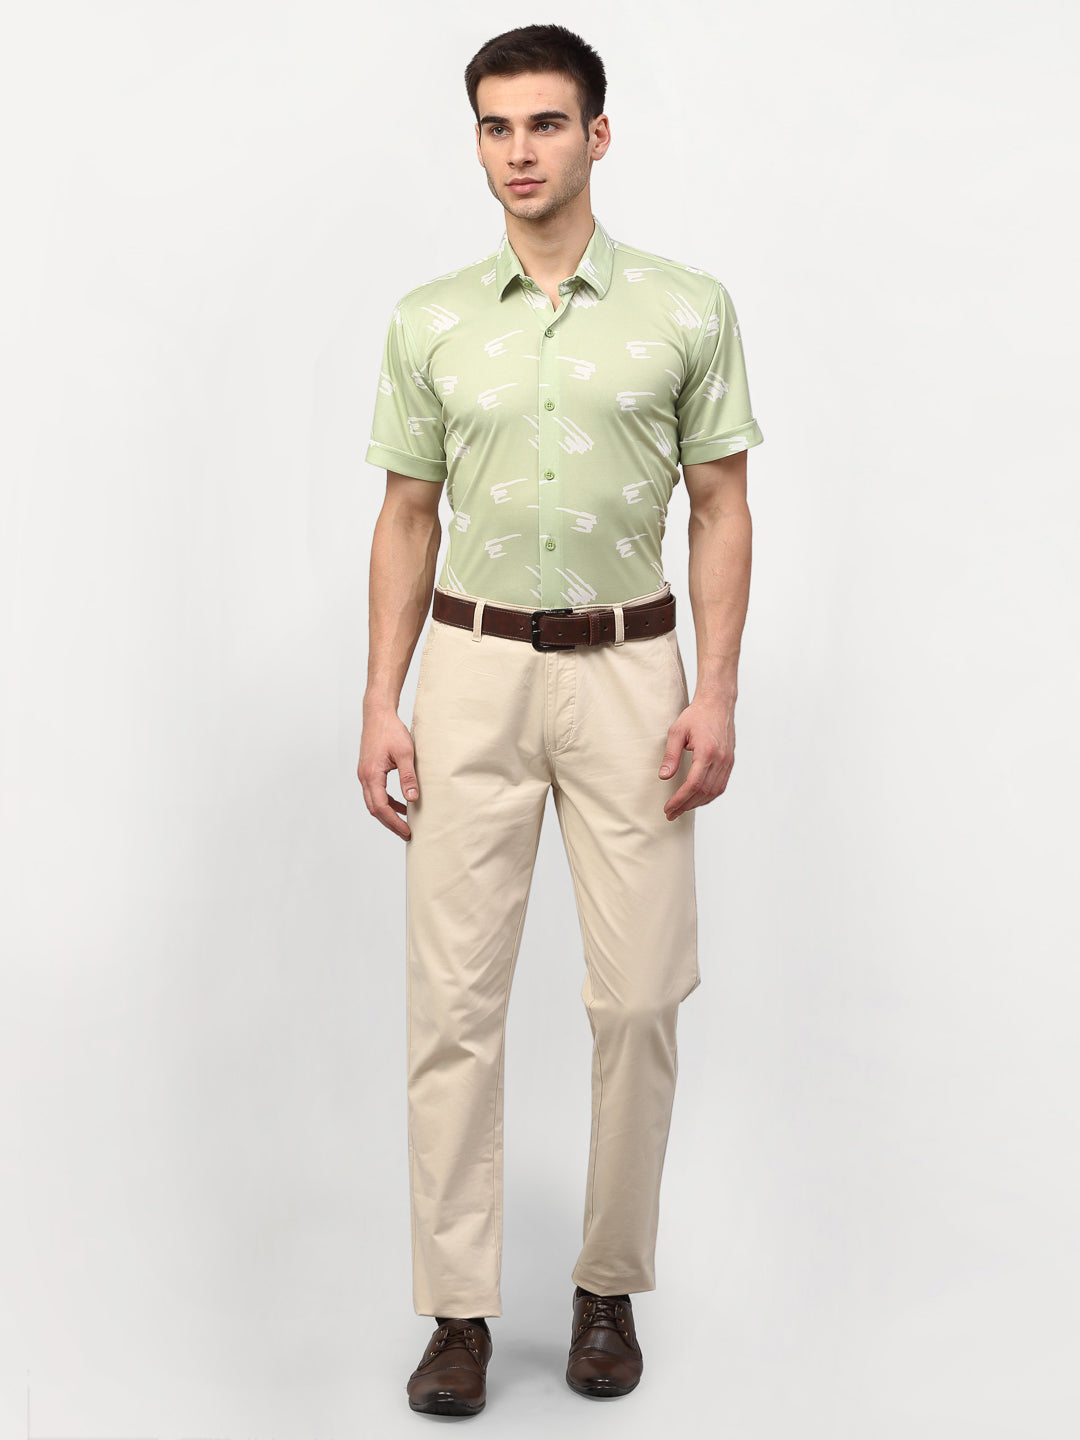 Men's Green Printed Lycra Half Sleevess Formal Shirts ( SF 778Pista ) - Jainish